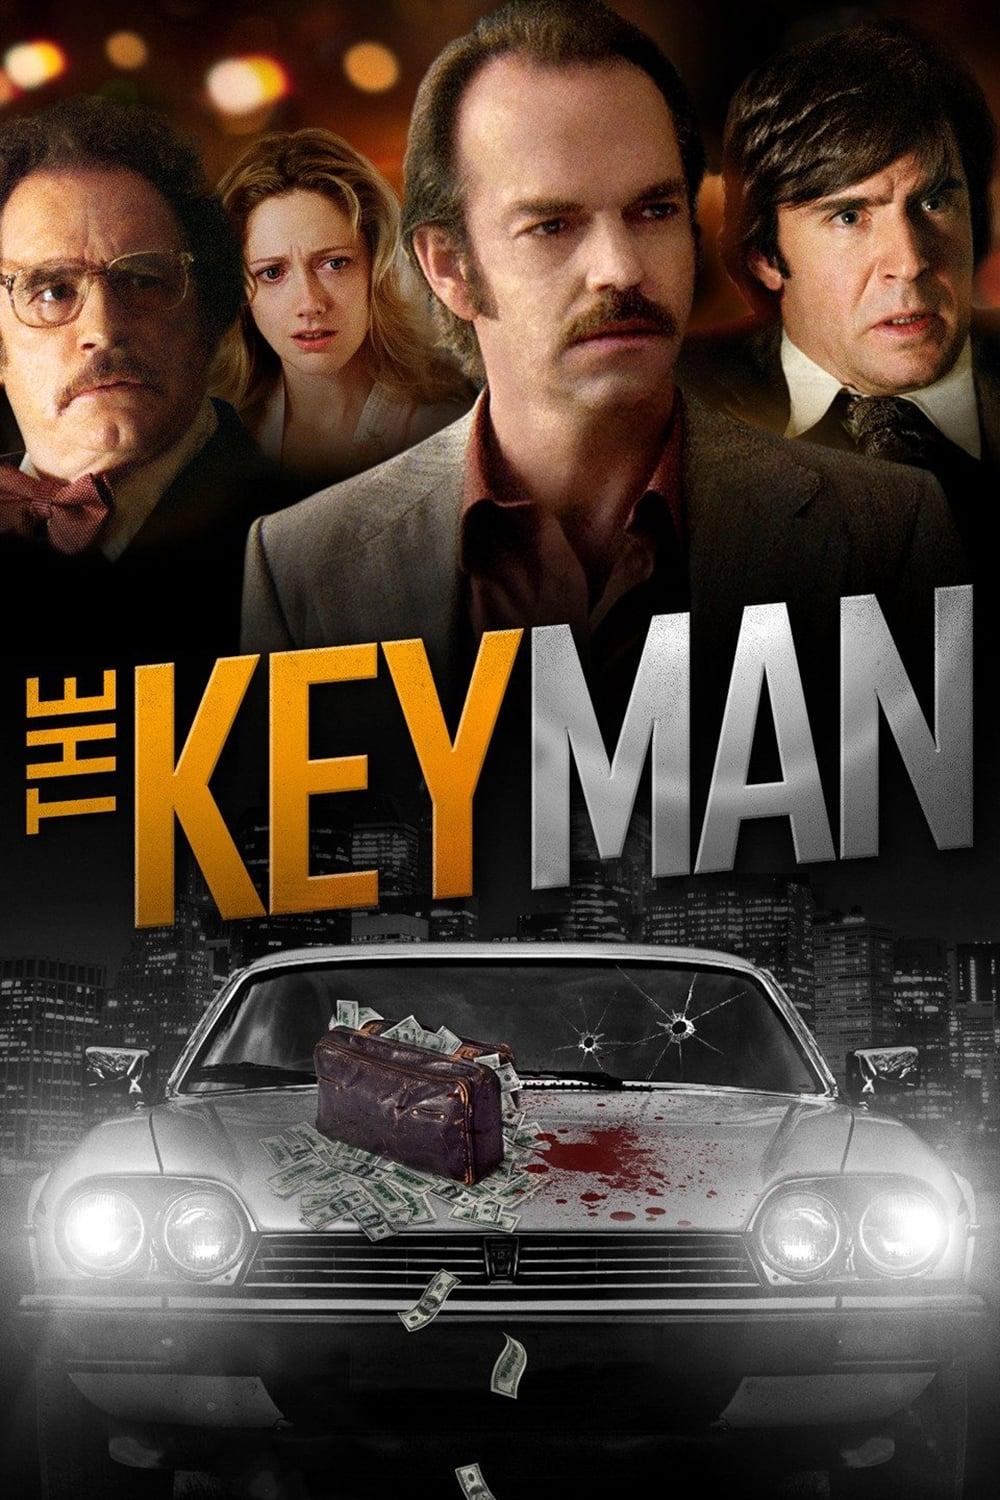 The Key Man poster